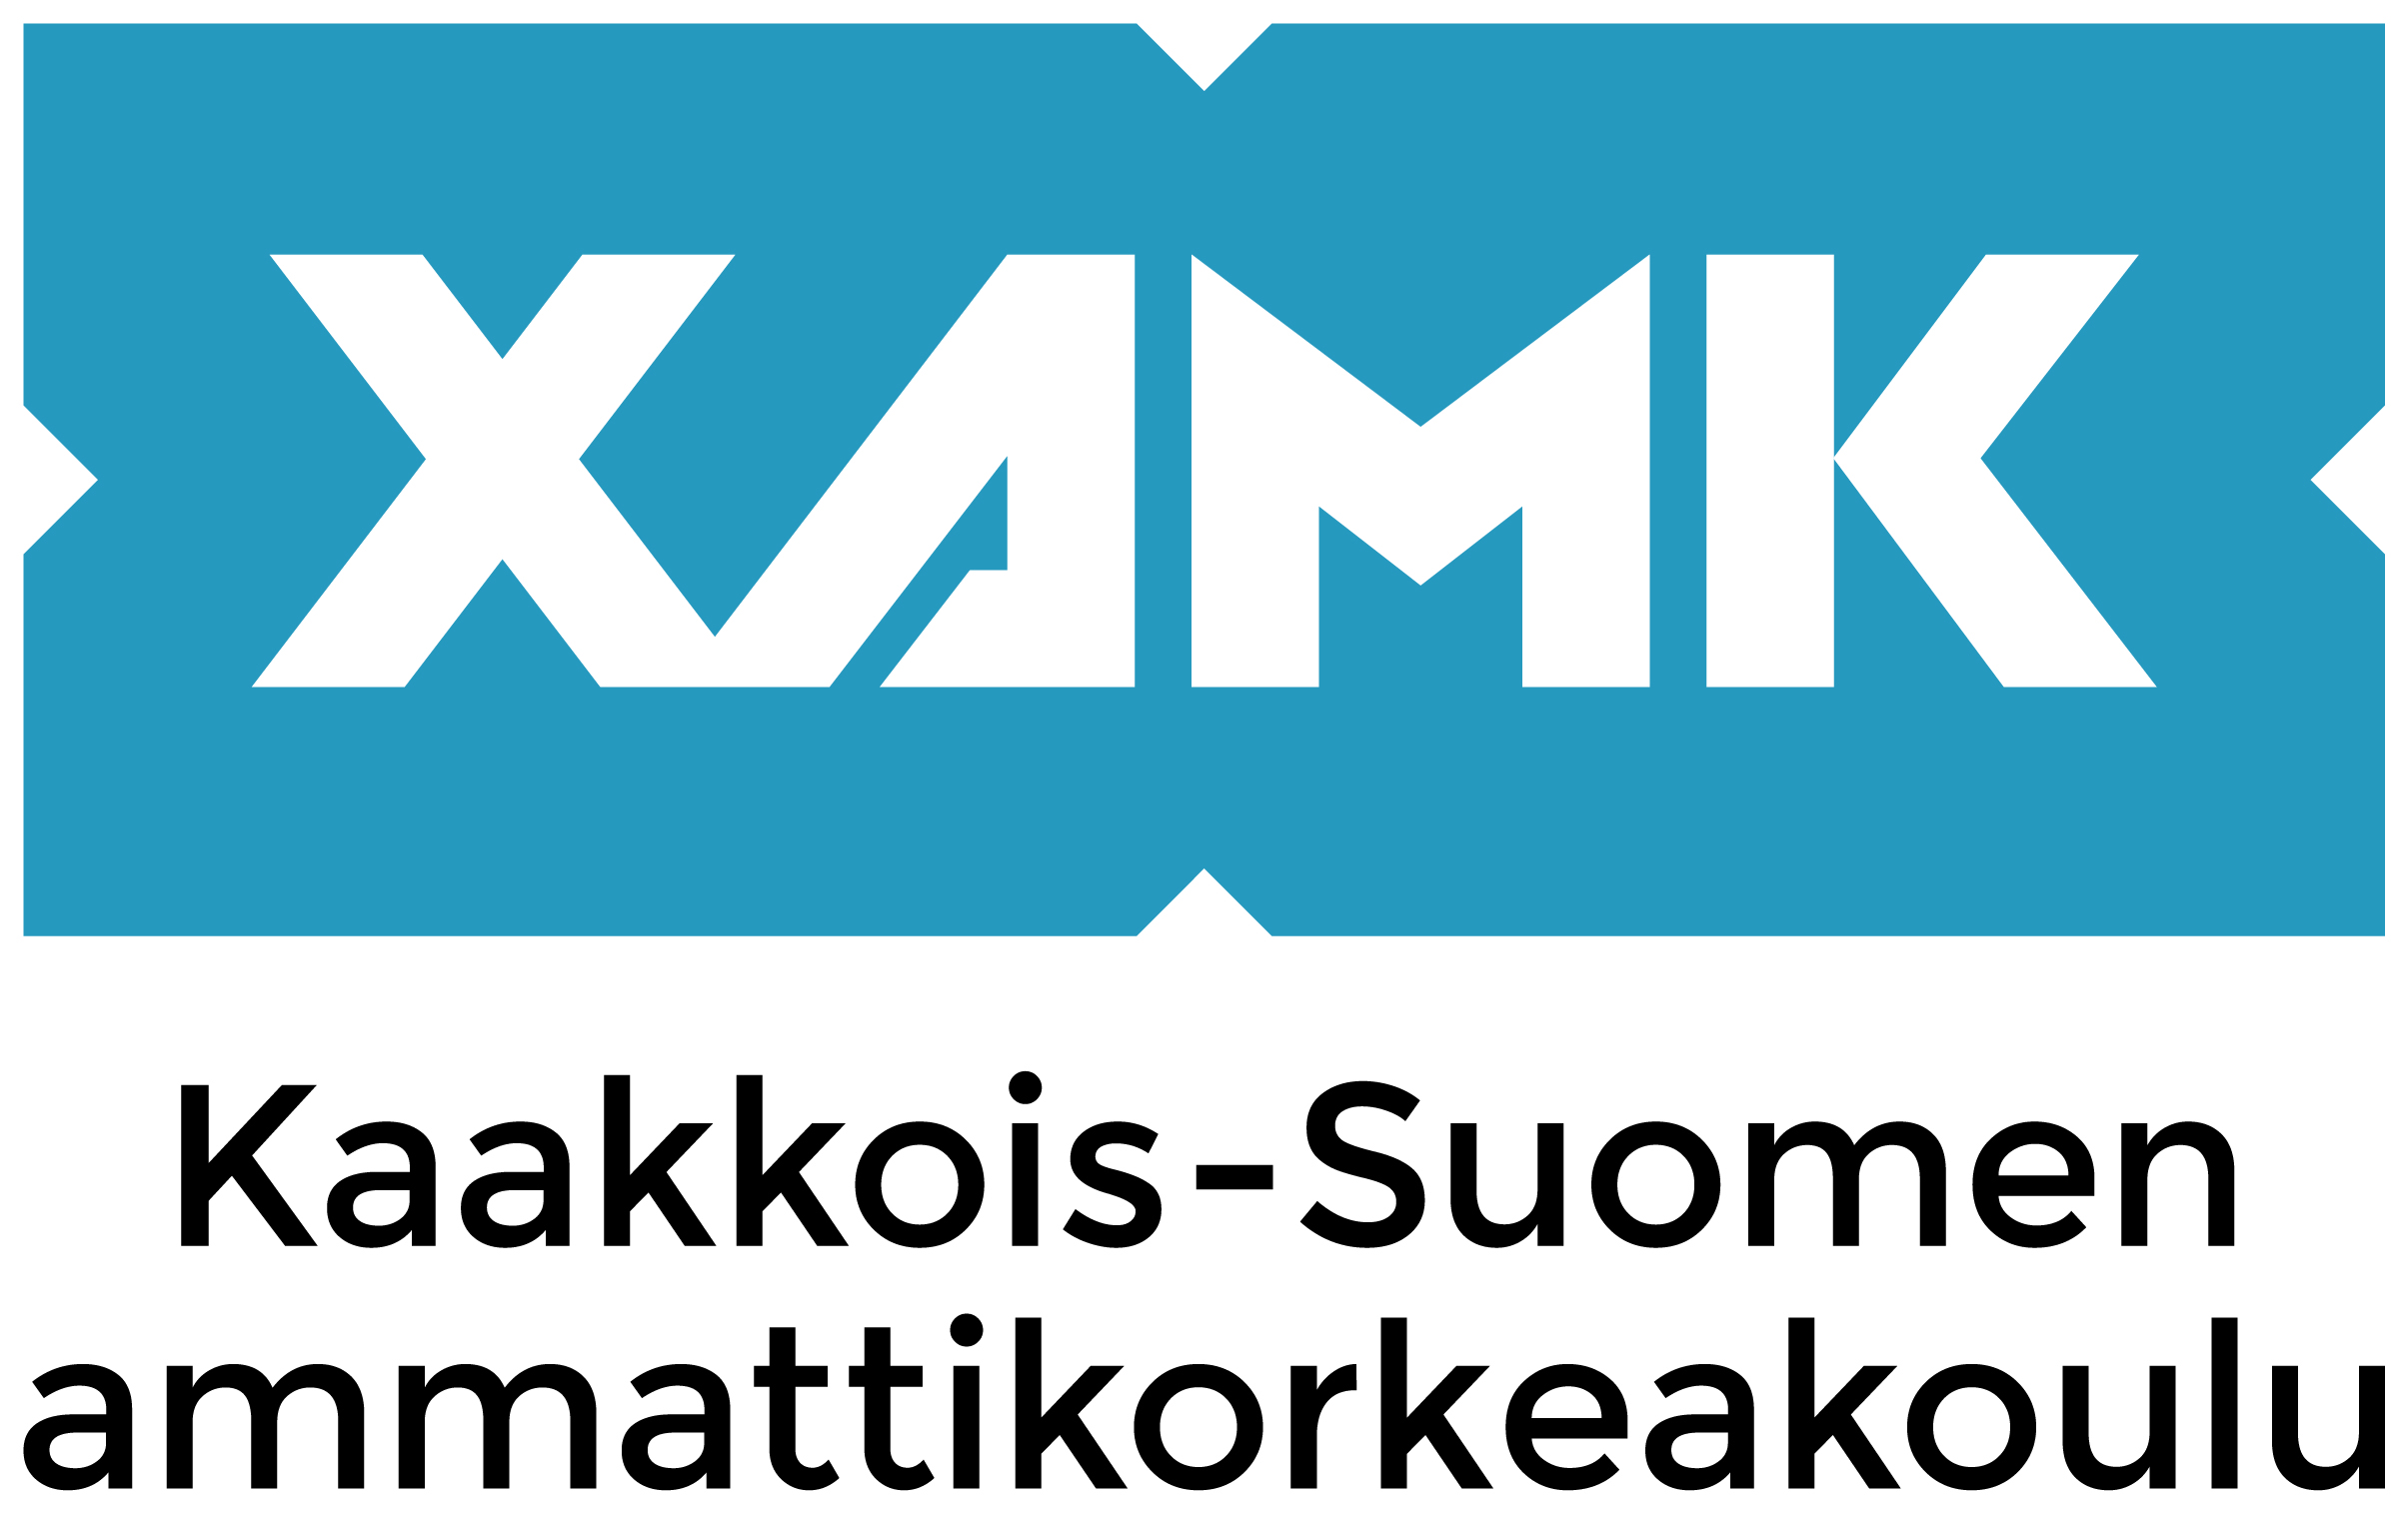 Kaakkois-Suomen ammattikorkeakoulun logo